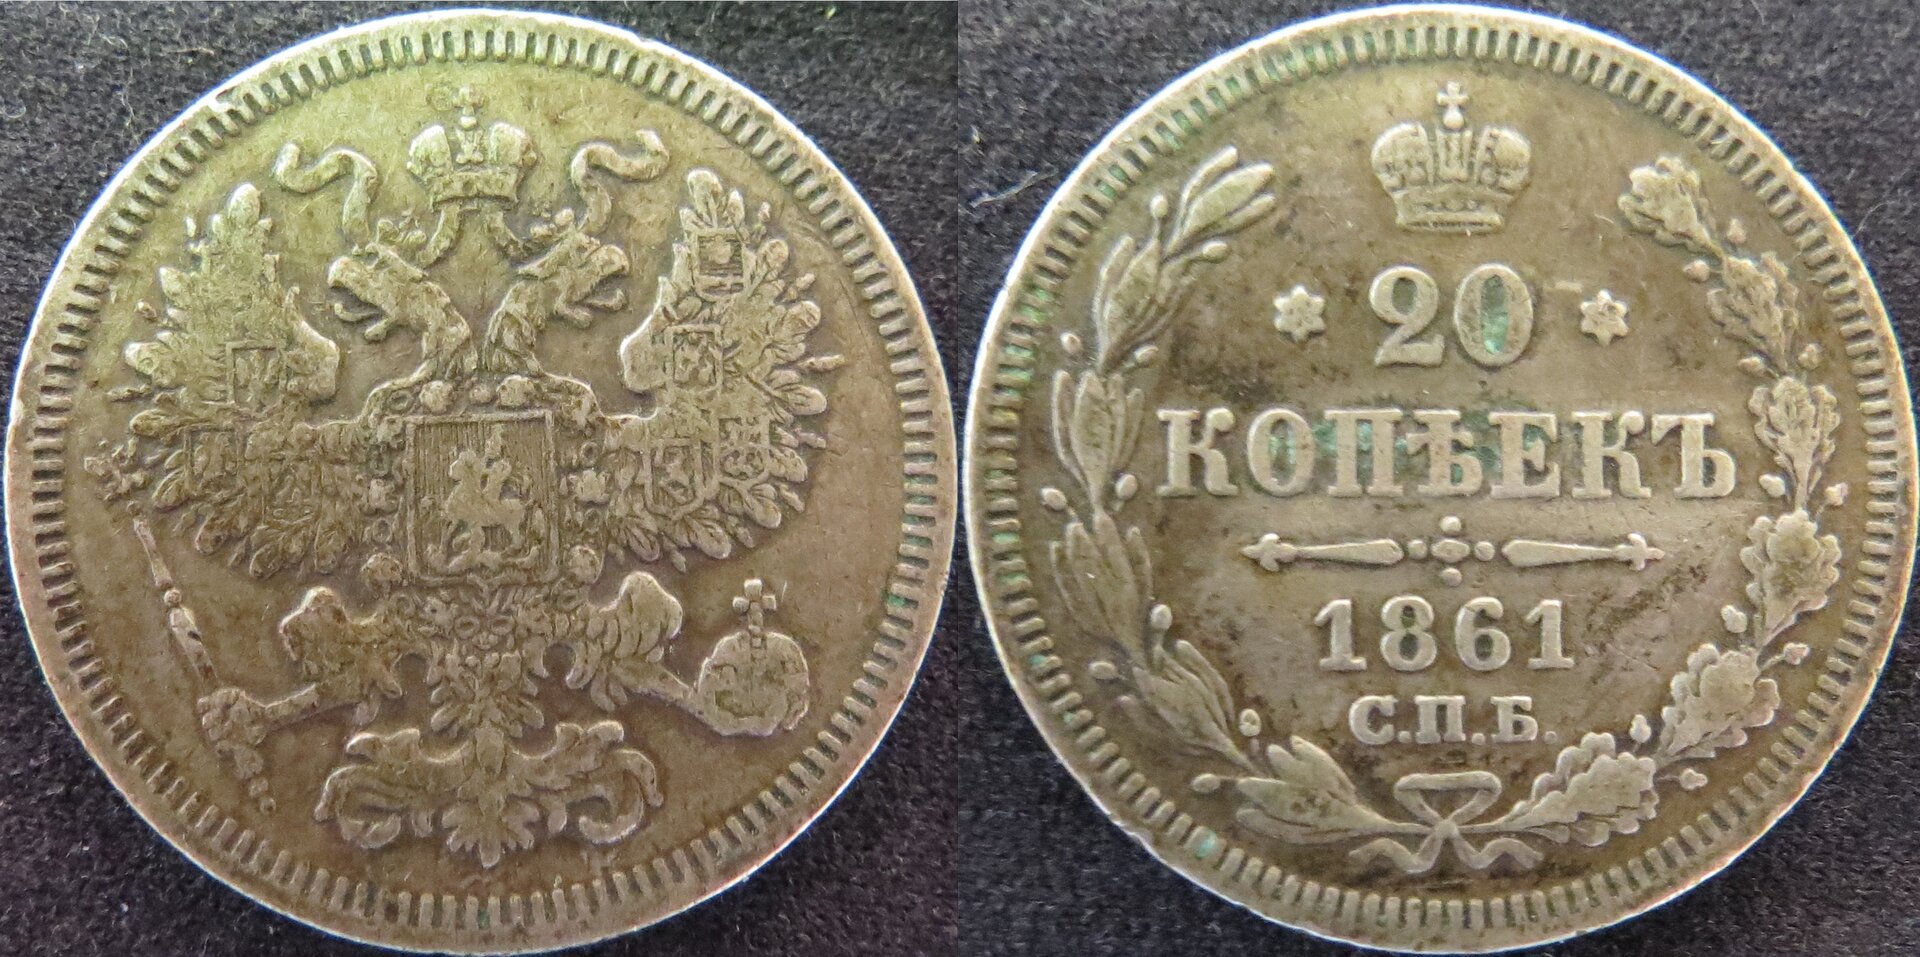 Russia 1861 20 Kopeks copy.jpeg